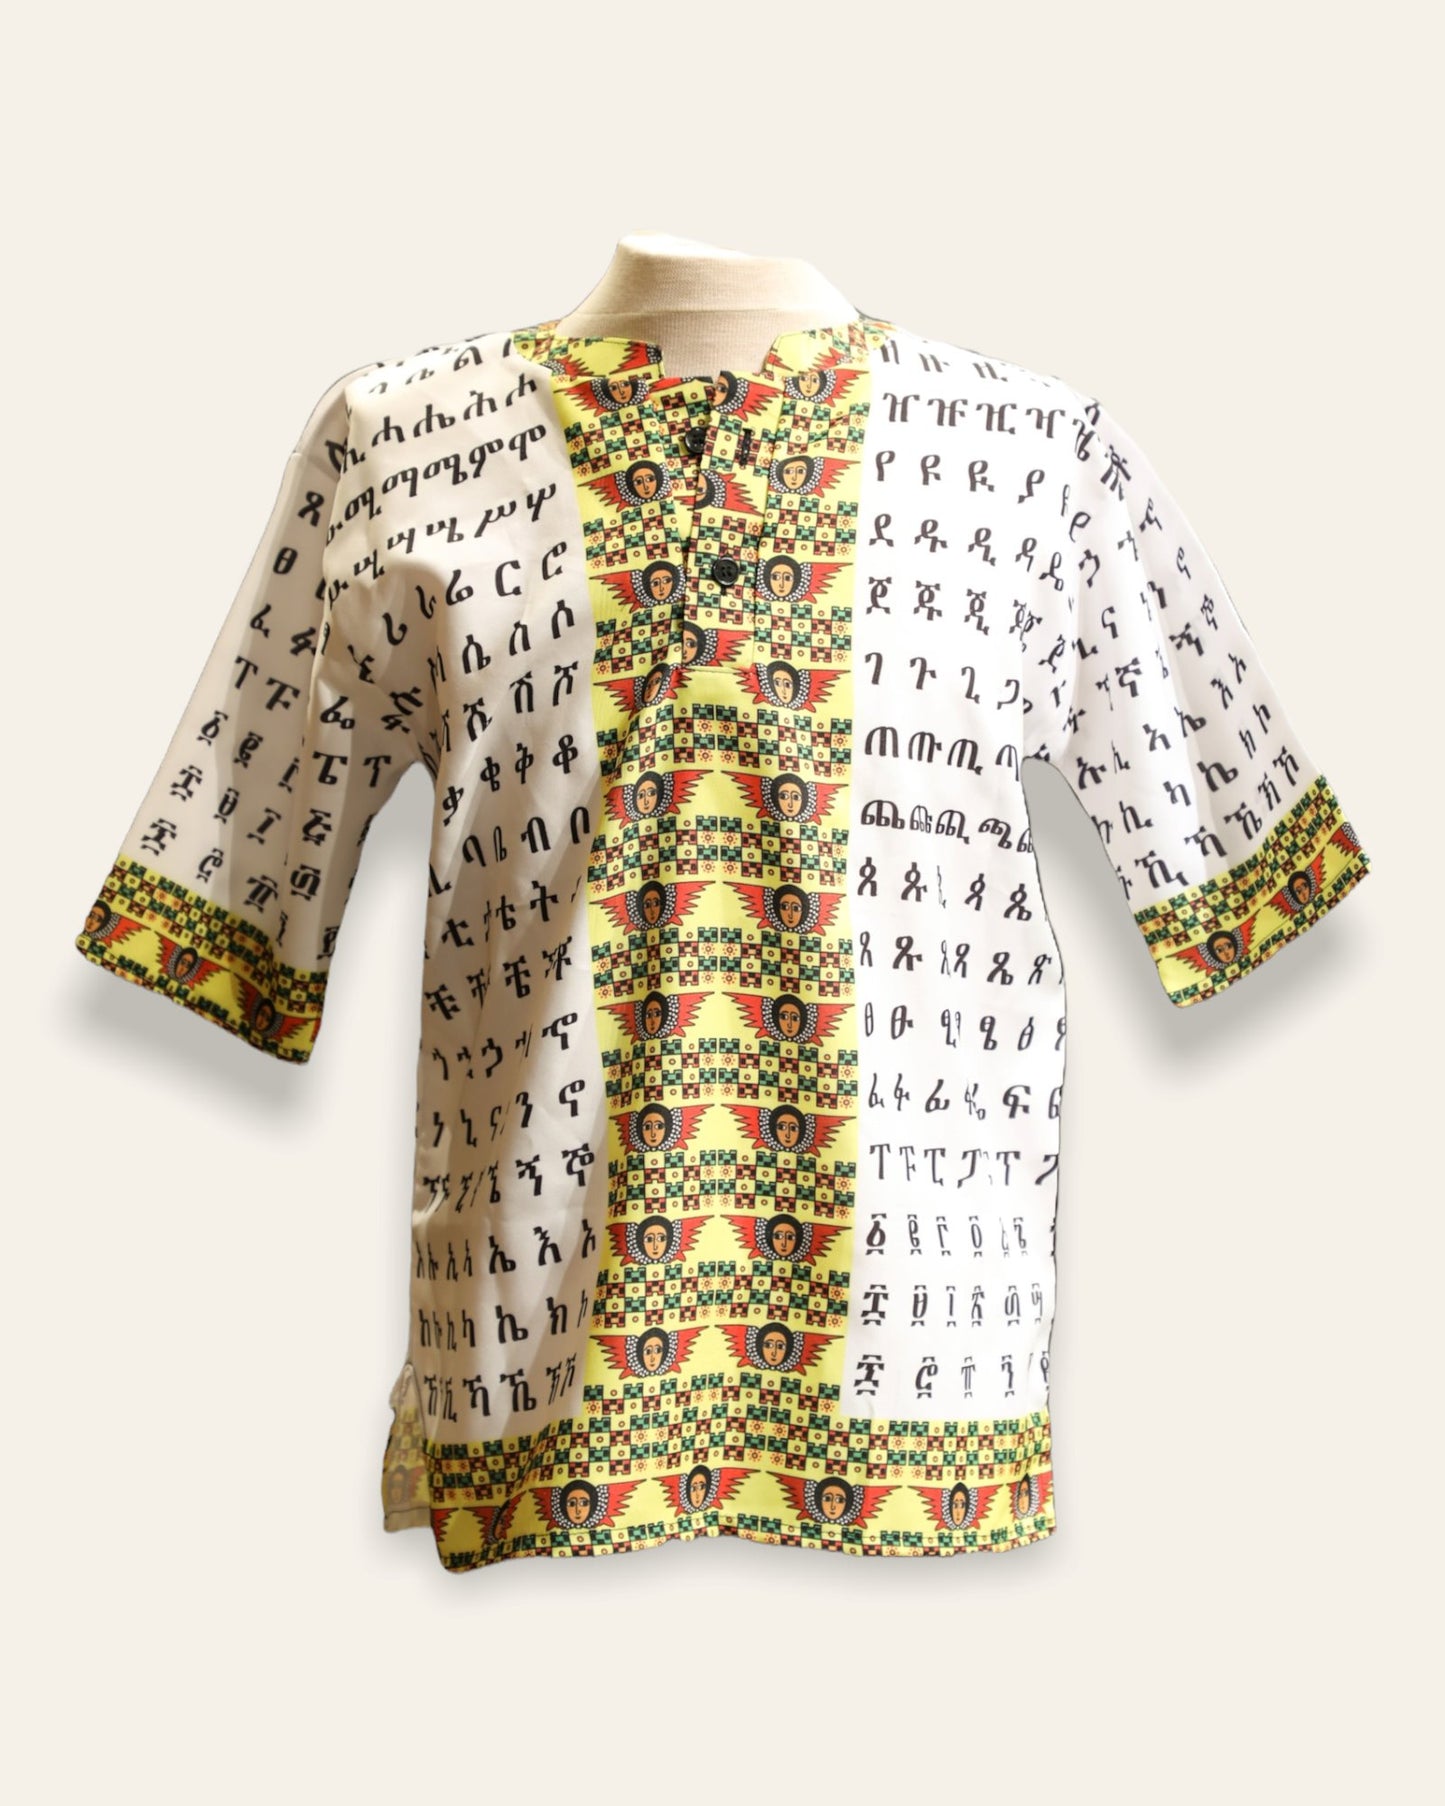 Men's Traditional Shirt Traditional Ethiopian Shirt Grmawit 2 